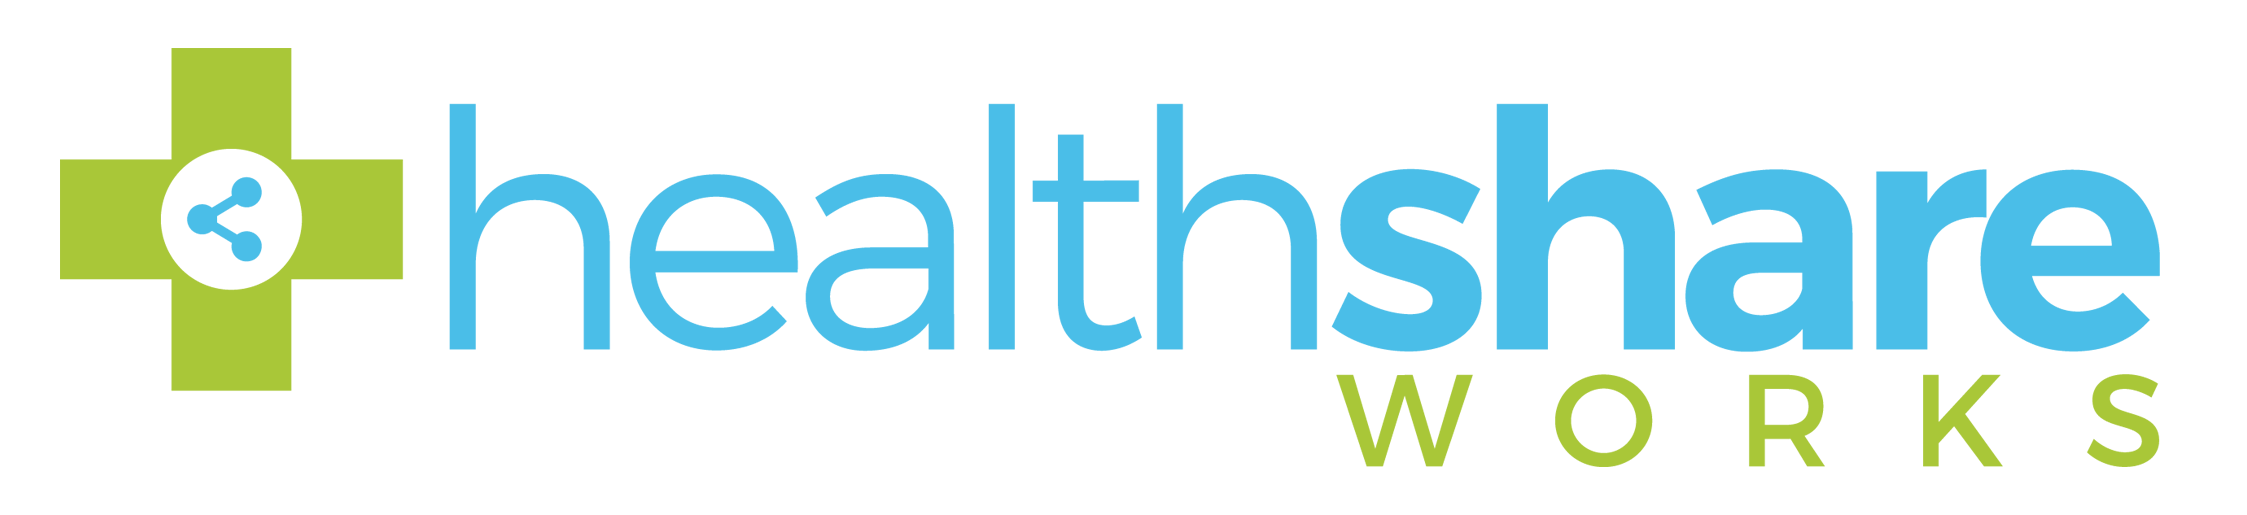 HealthShare Works